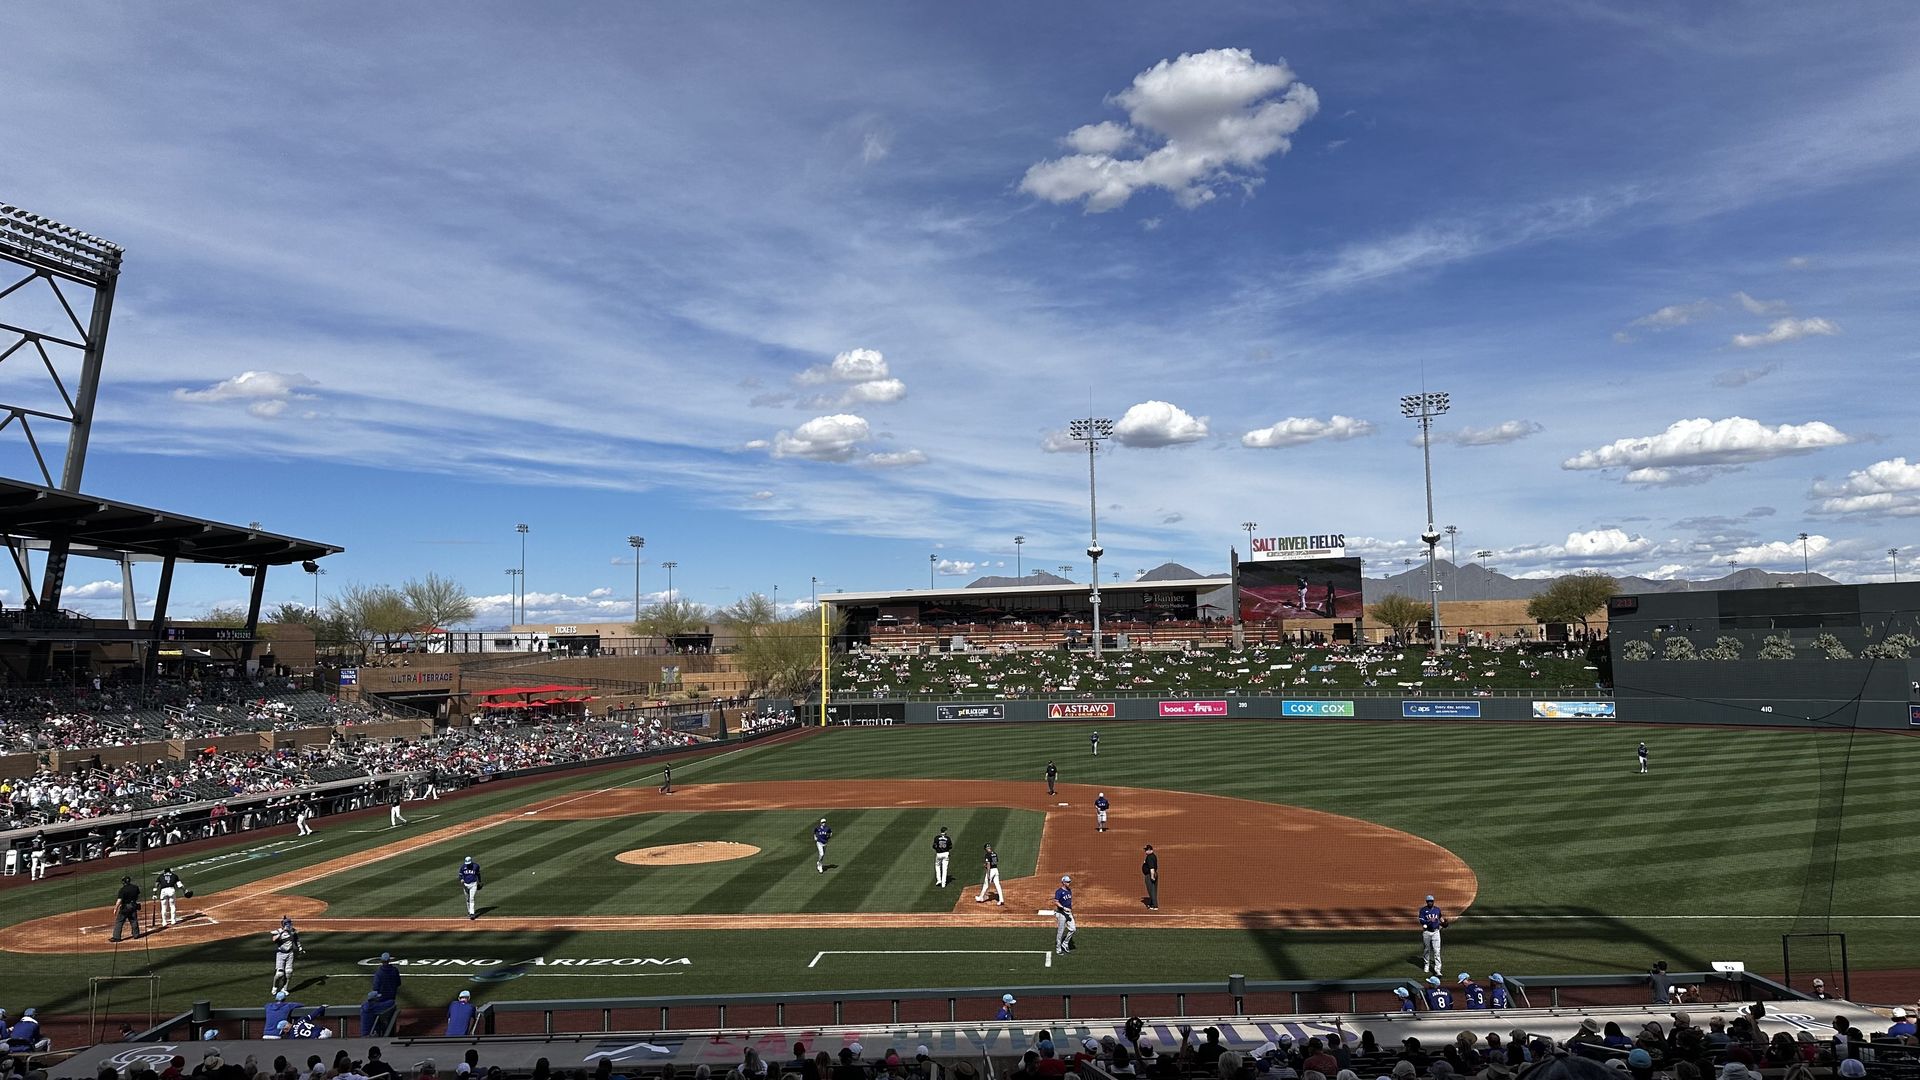 A photo of the Arizona Diamondbacks spring training facility and game against the Texas Rangers